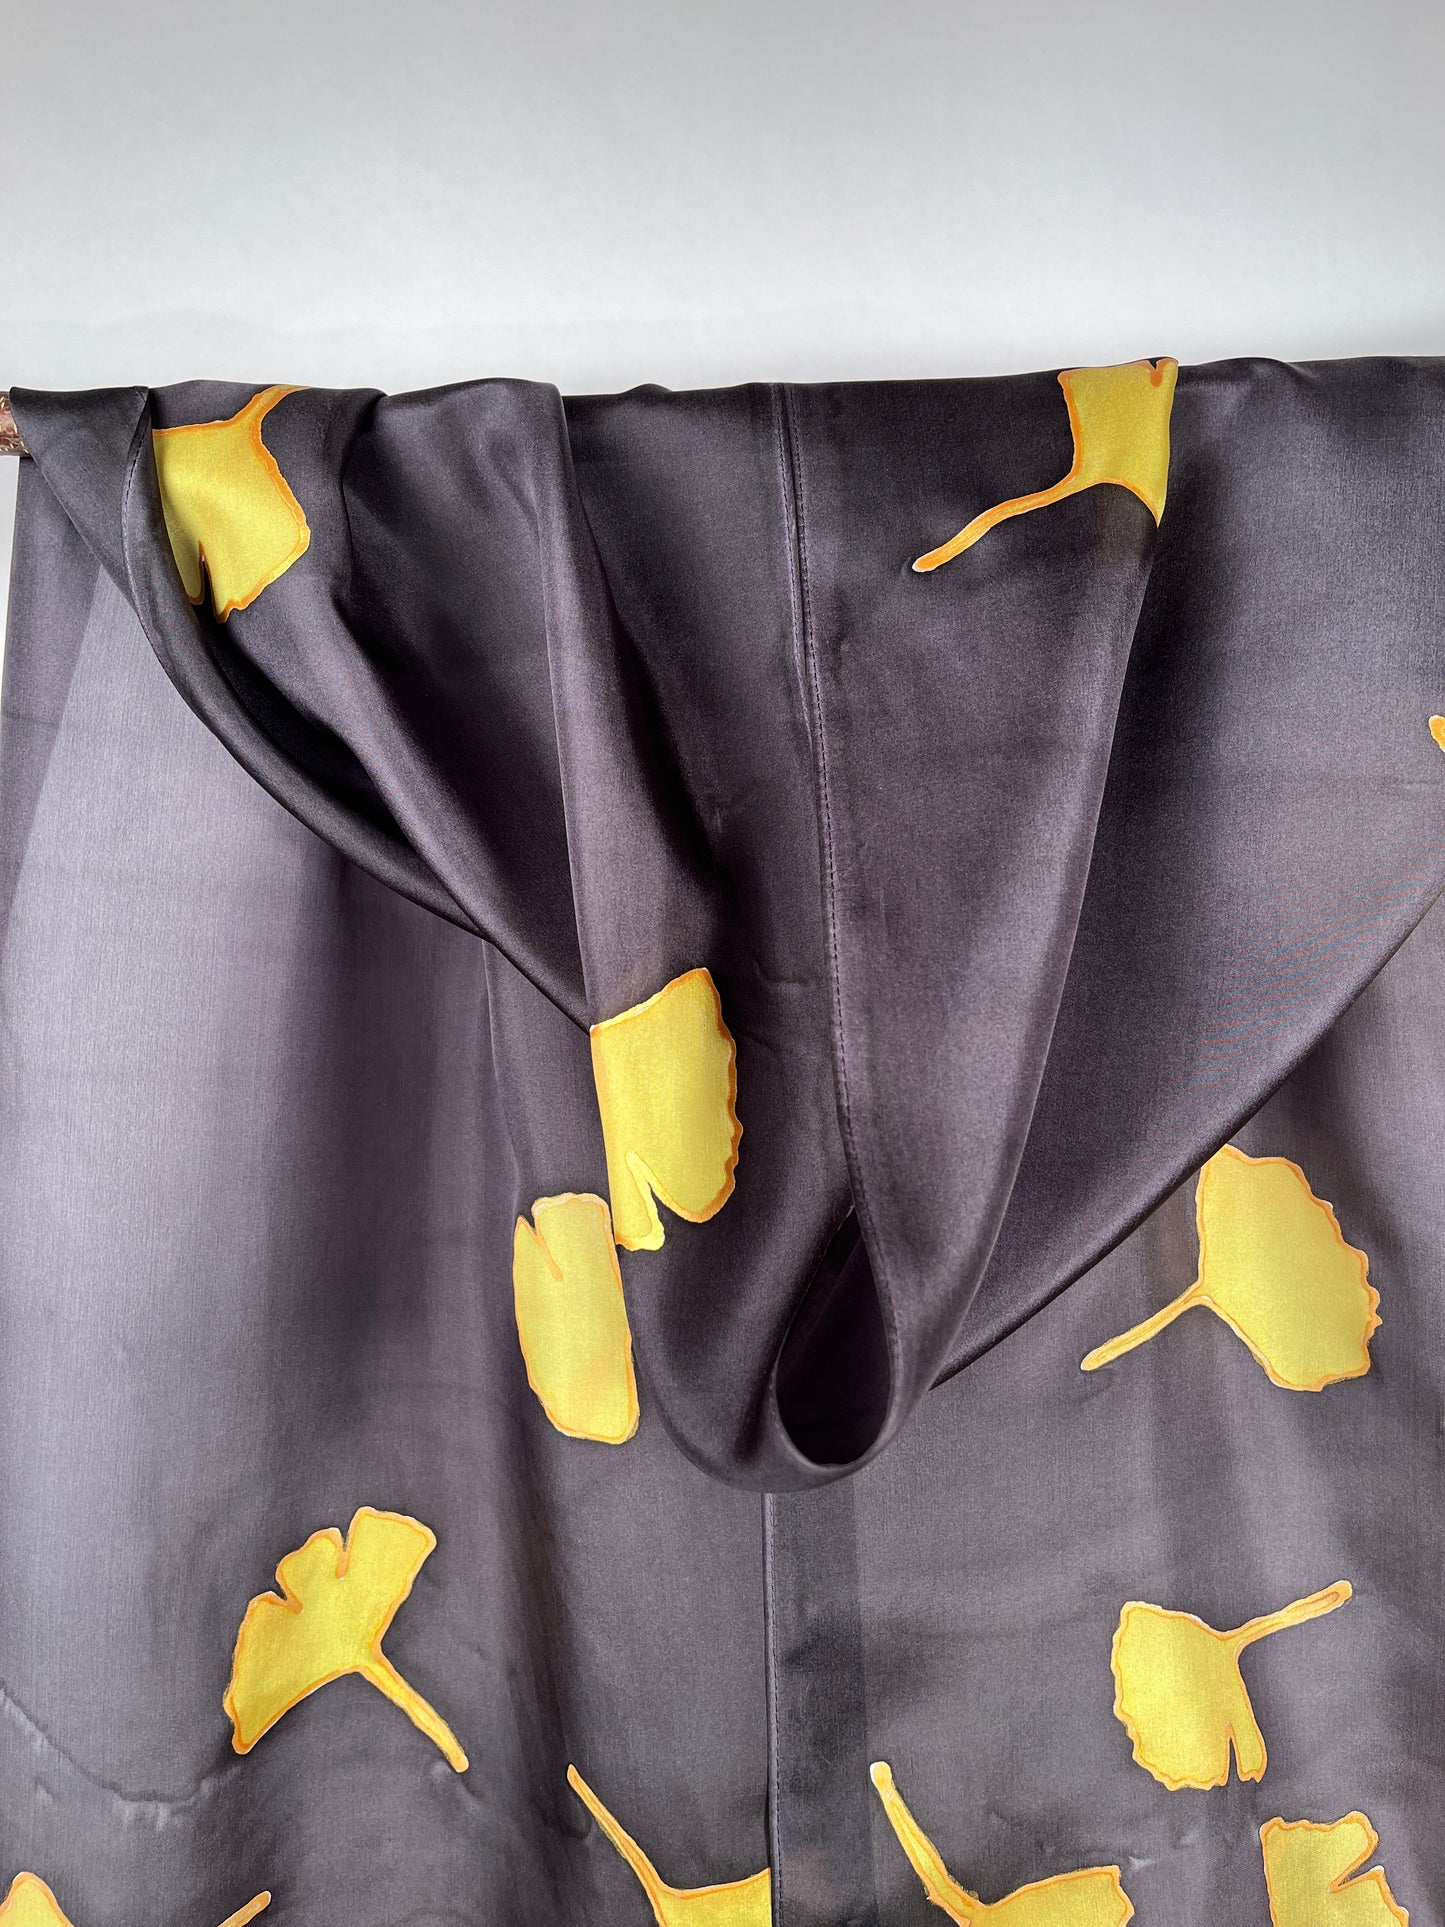 “Golden Gingko on Black" - Hand-dyed Silk Scarf - $130